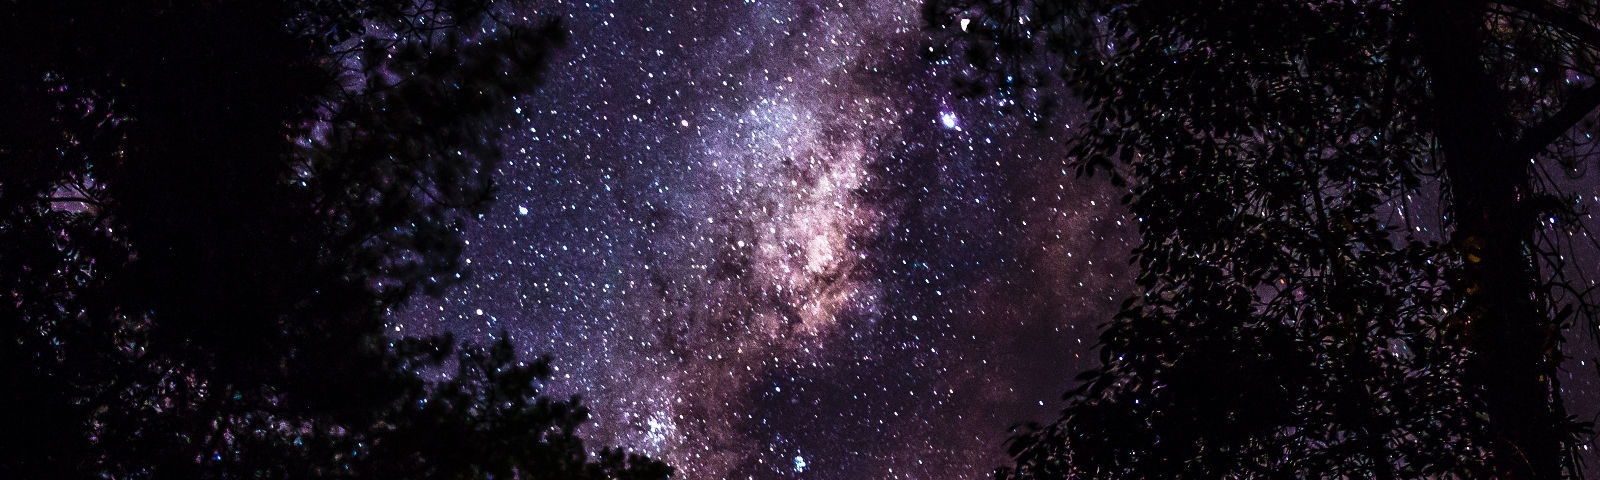 Trees Under Milky Way - Matthew Ang